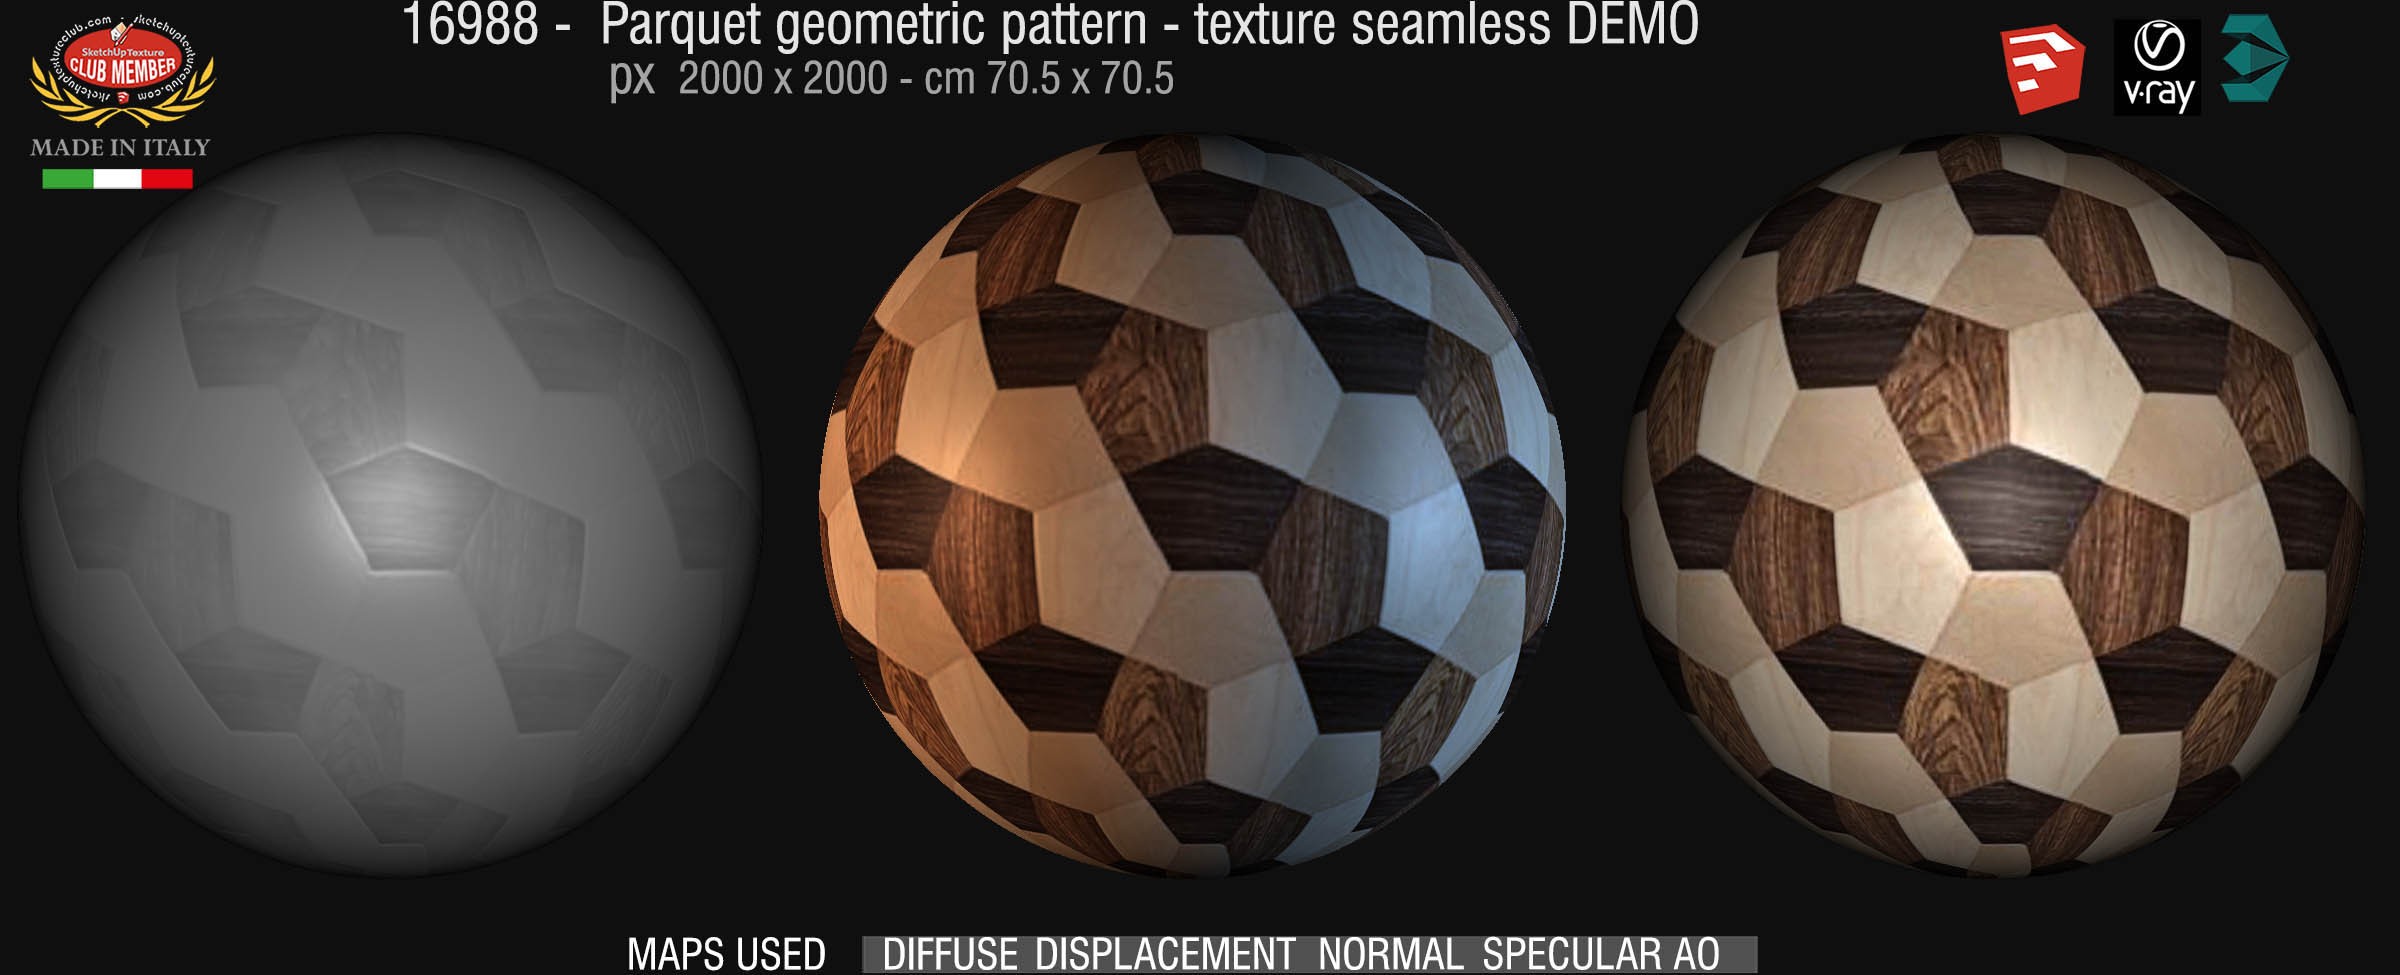 16988 Parquet geometric pattern texture seamless + maps DEMO